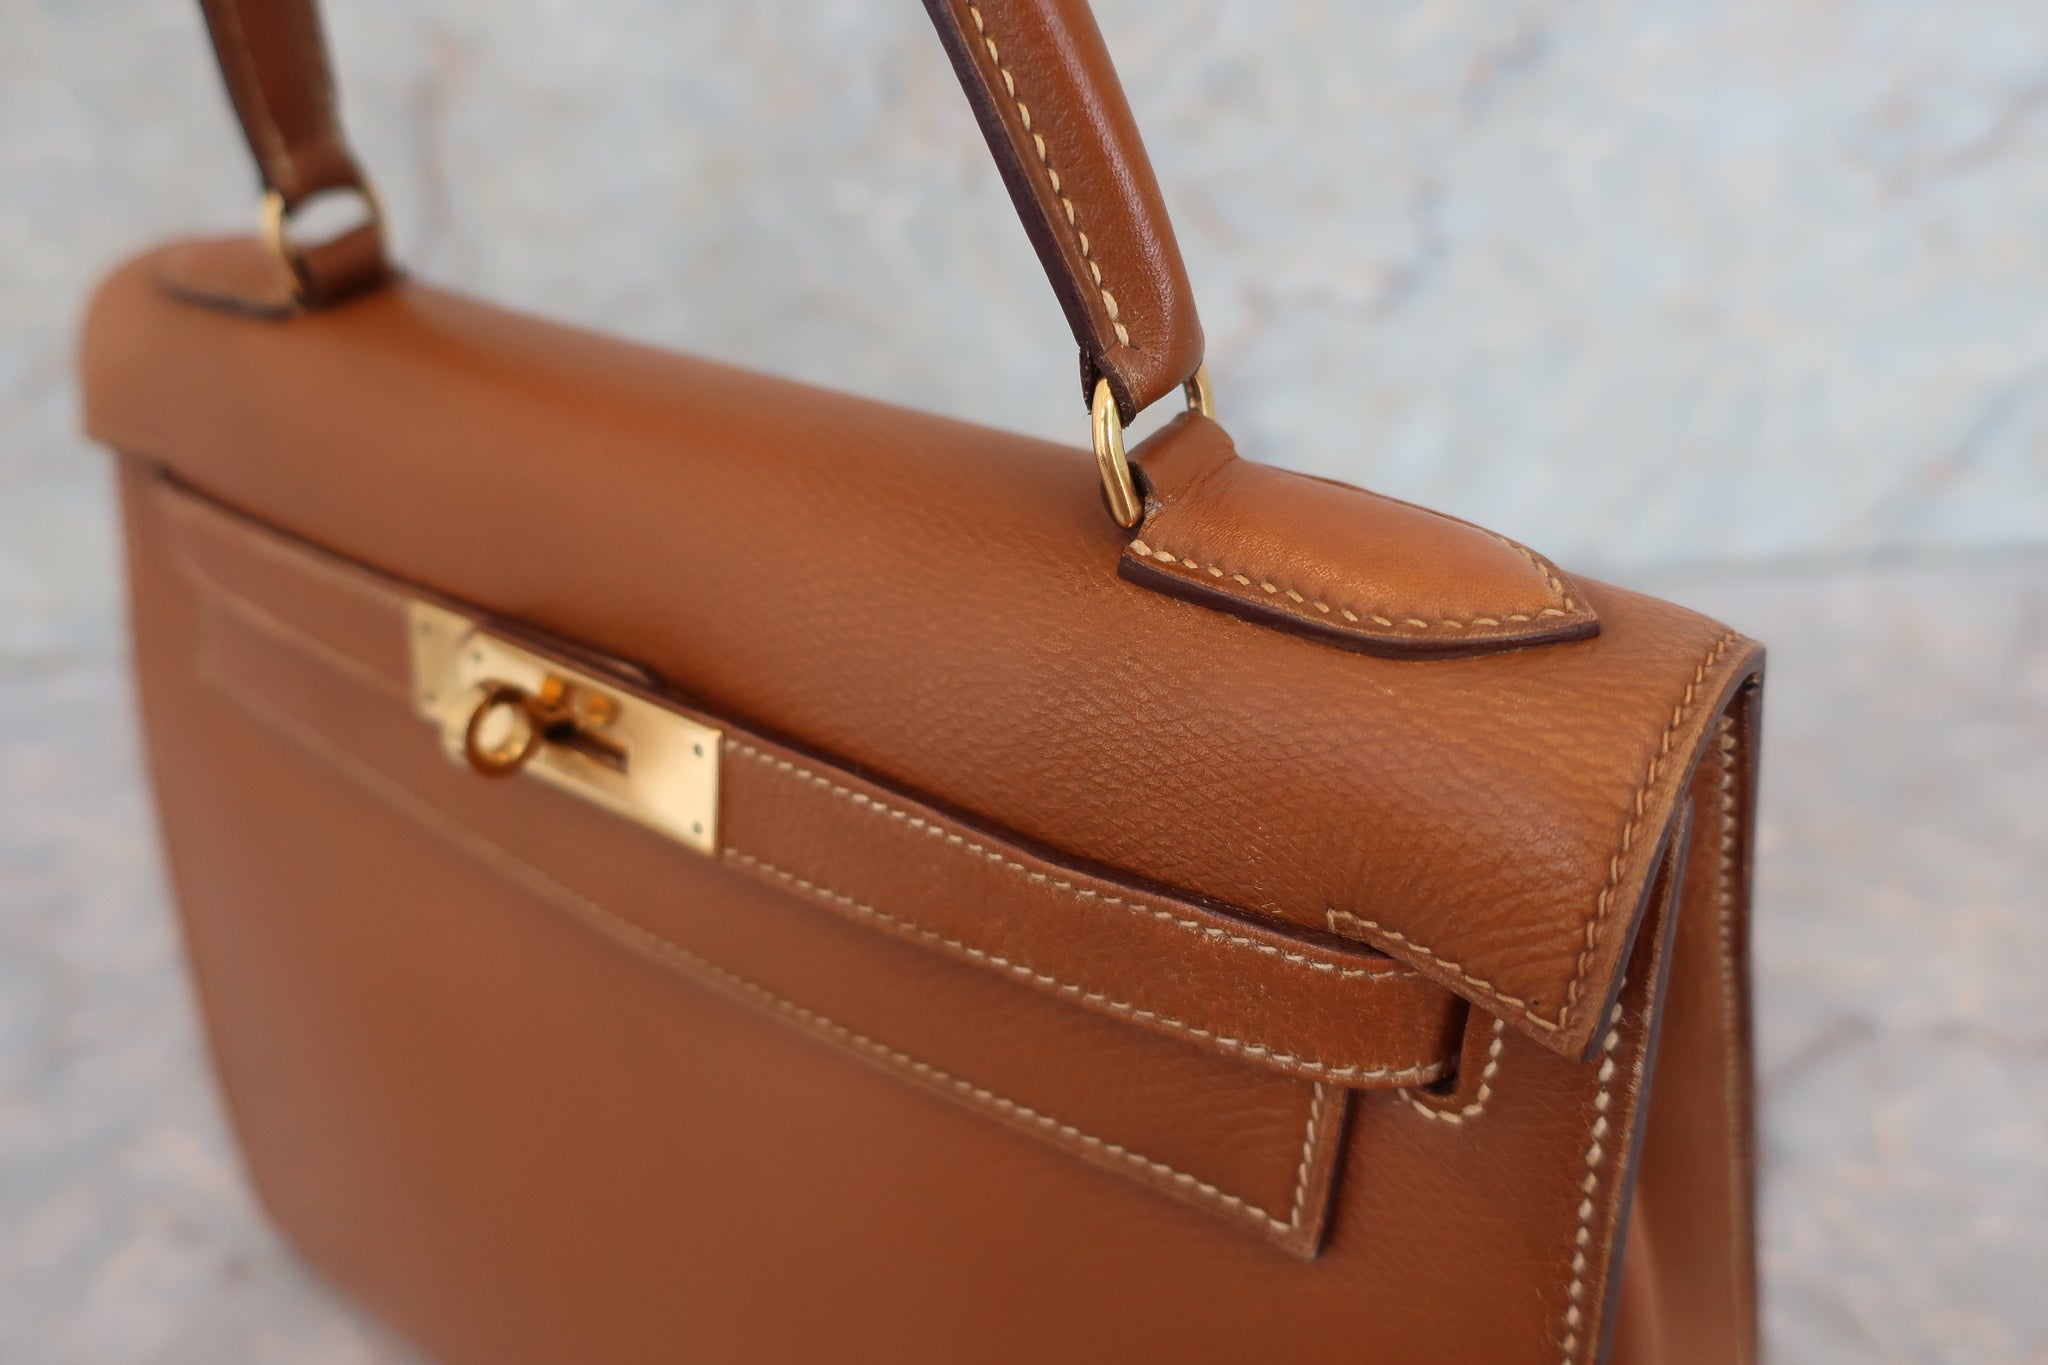 Hermès Kelly 35 Leather Handbag